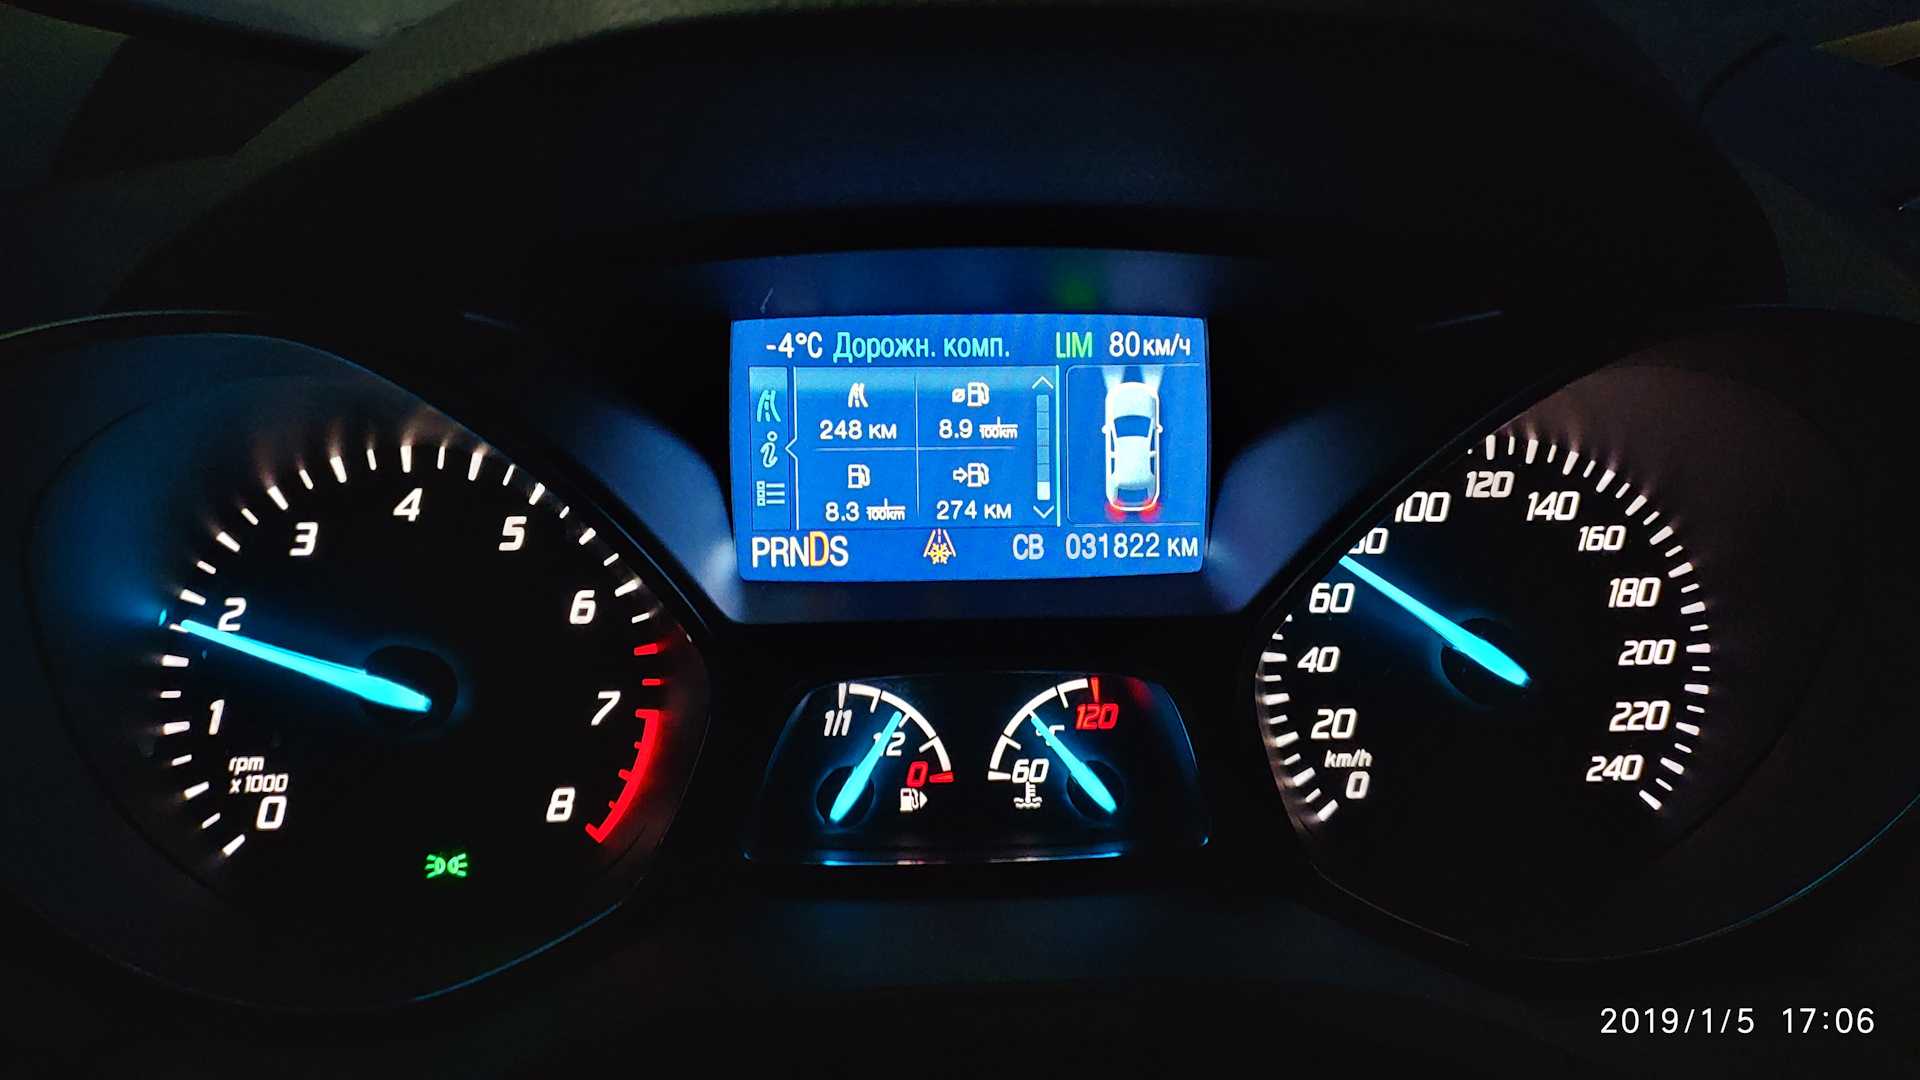 Форд куга 1.6, 2.0, 2.5 расход топлива автомат, механика, дизель и бензин на 100 км